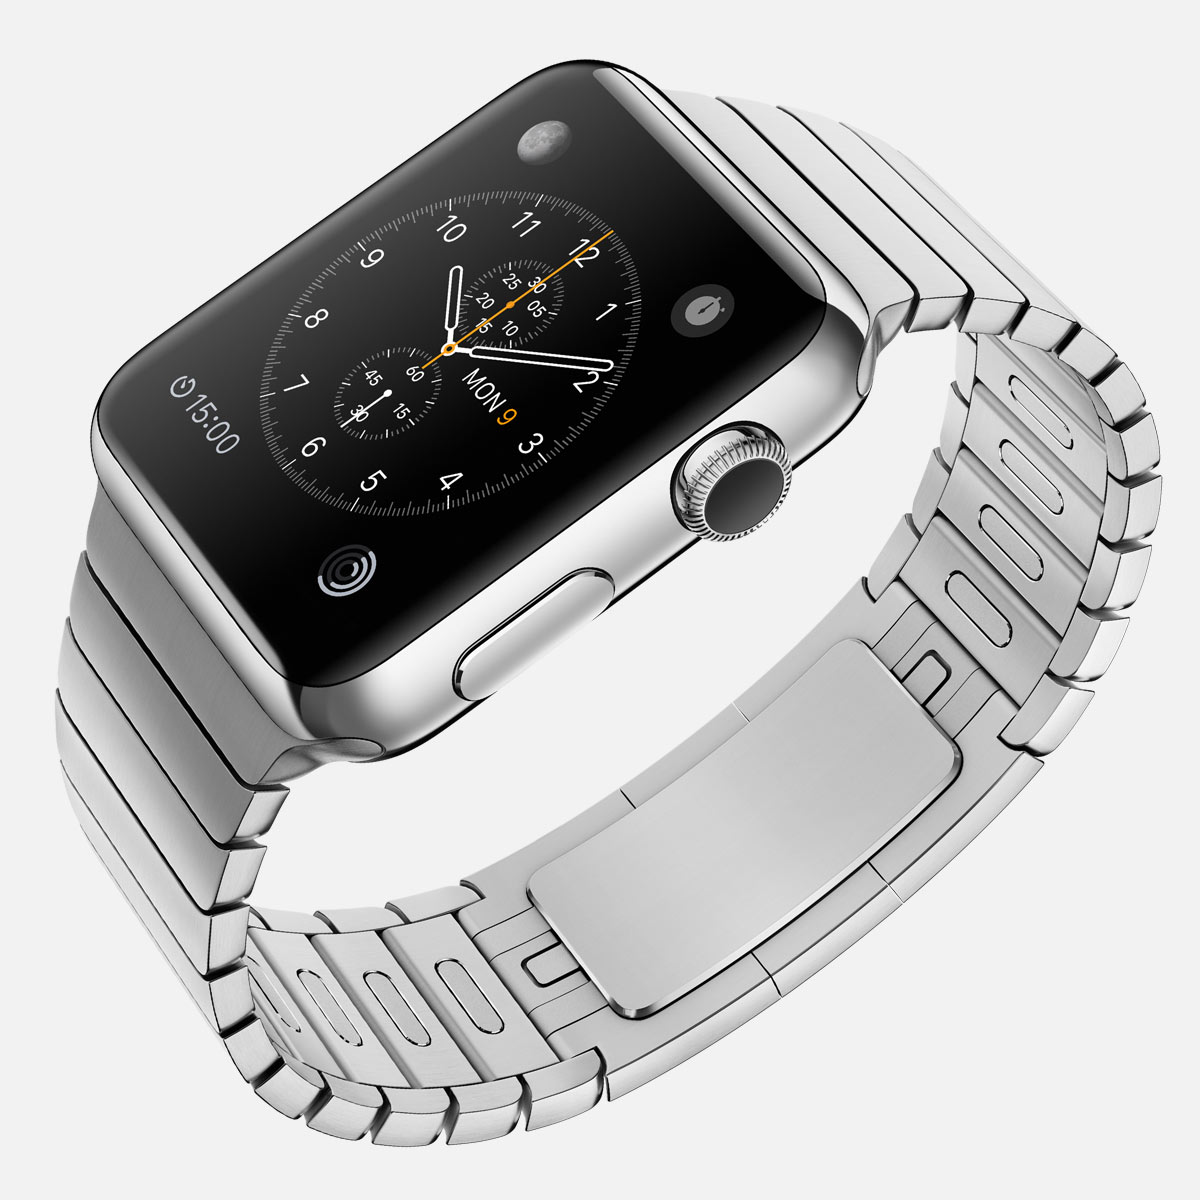 Apple Watch 4 Nuovi Spot